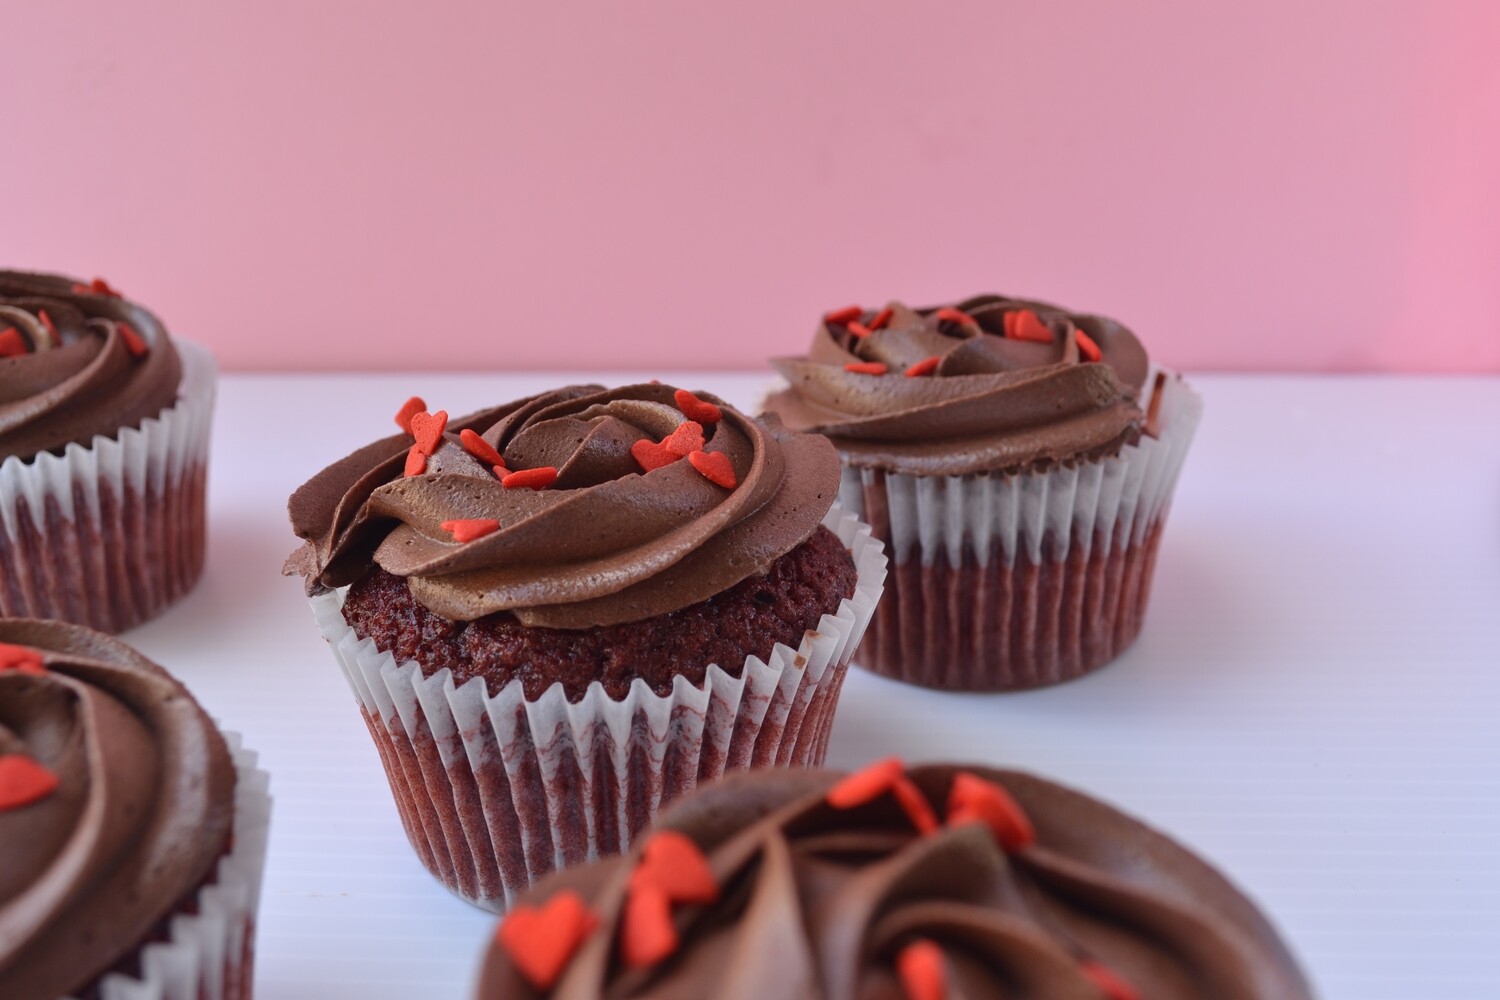 Chocolate Redvelvet cupcakes